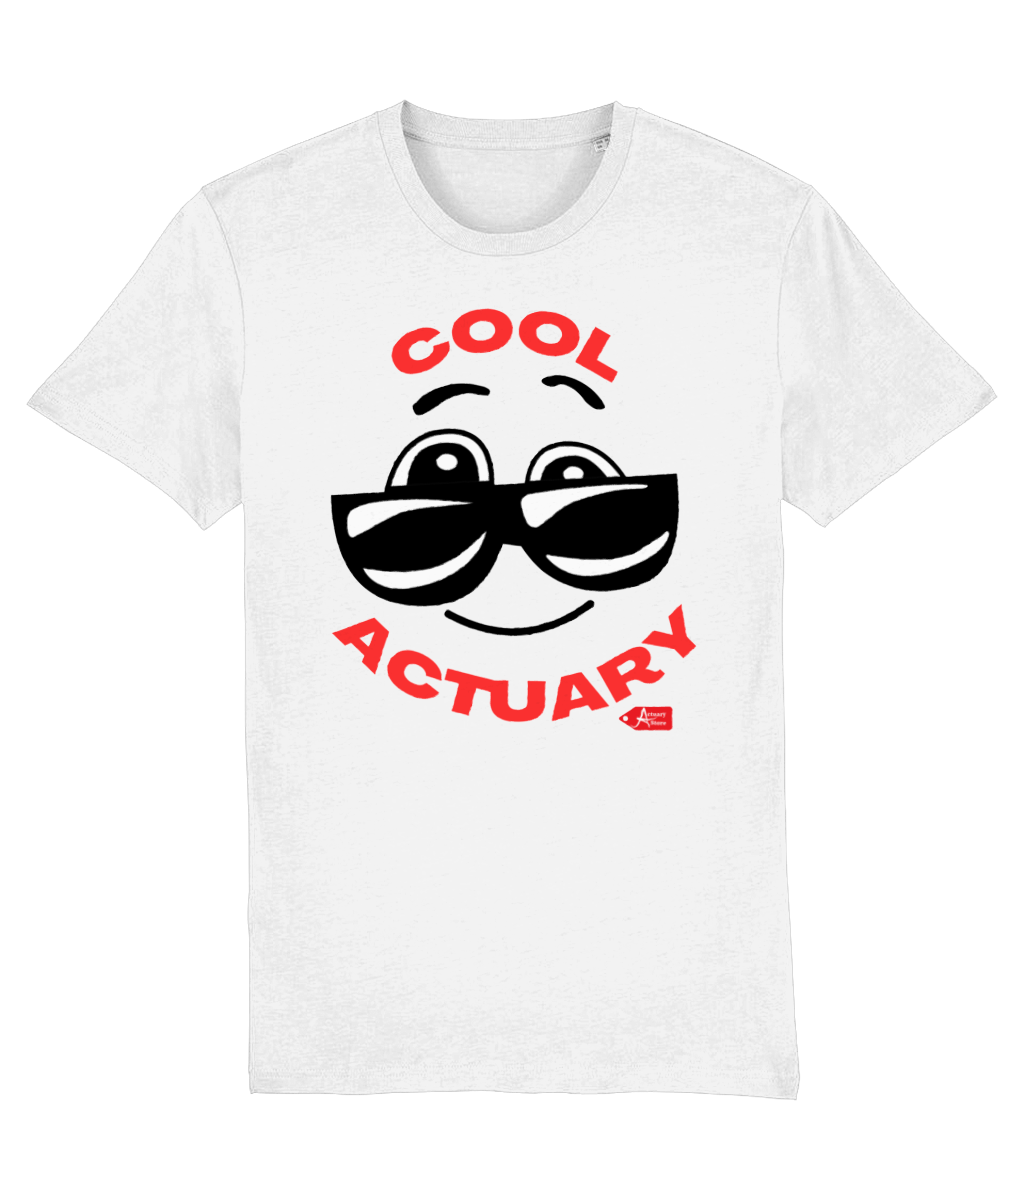 Cool Actuary Face T-Shirt